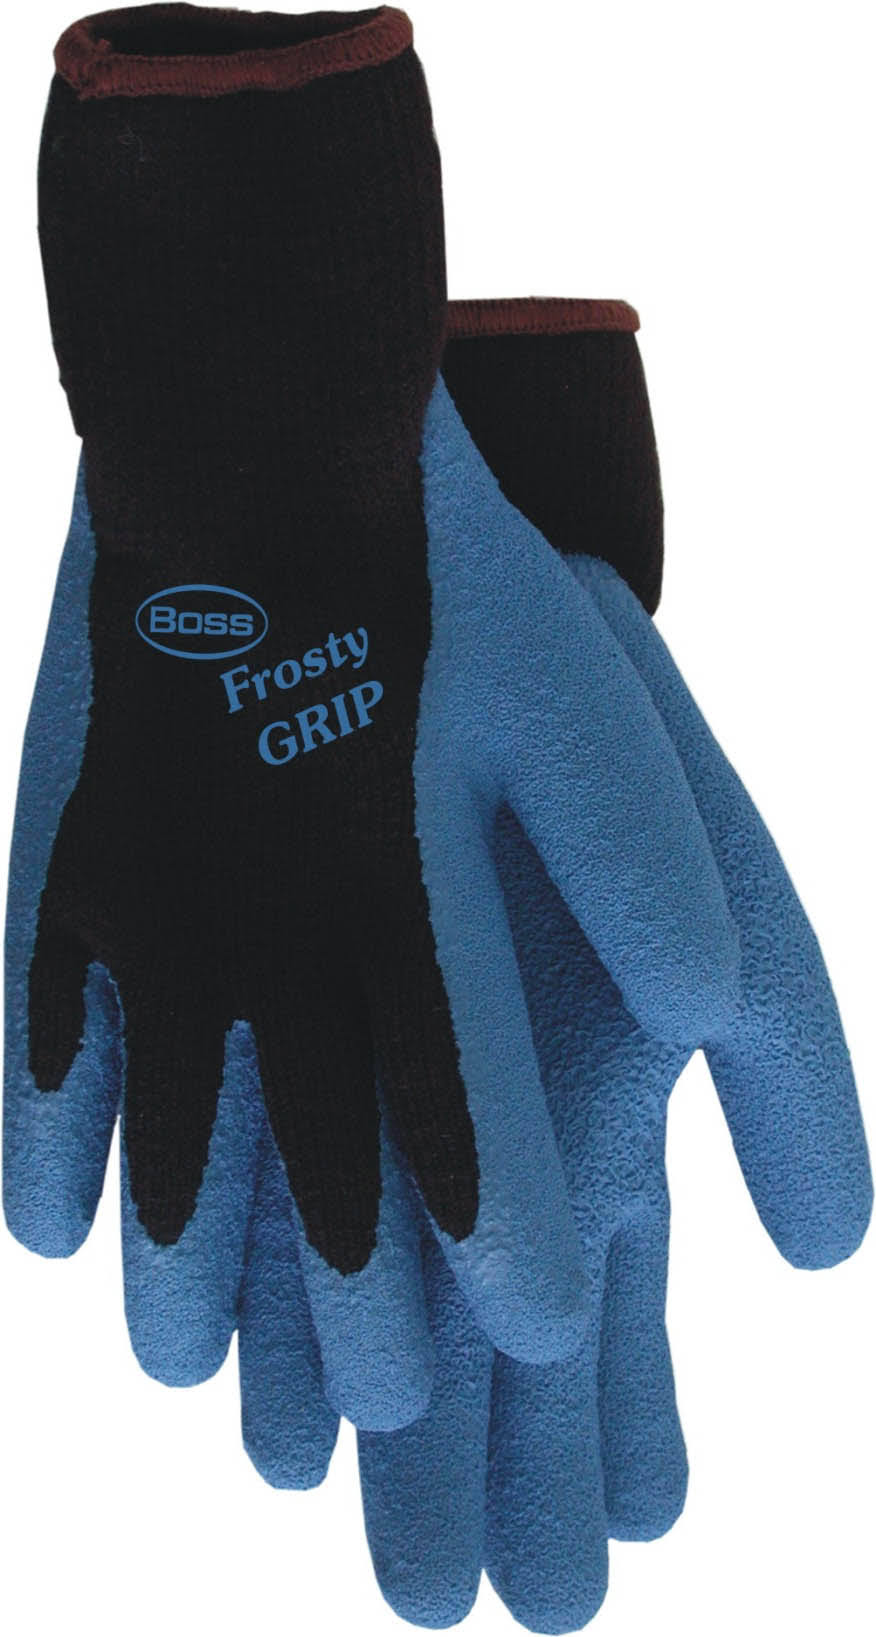 Boss Gloves Frost Grip Gloves - Large, Blue